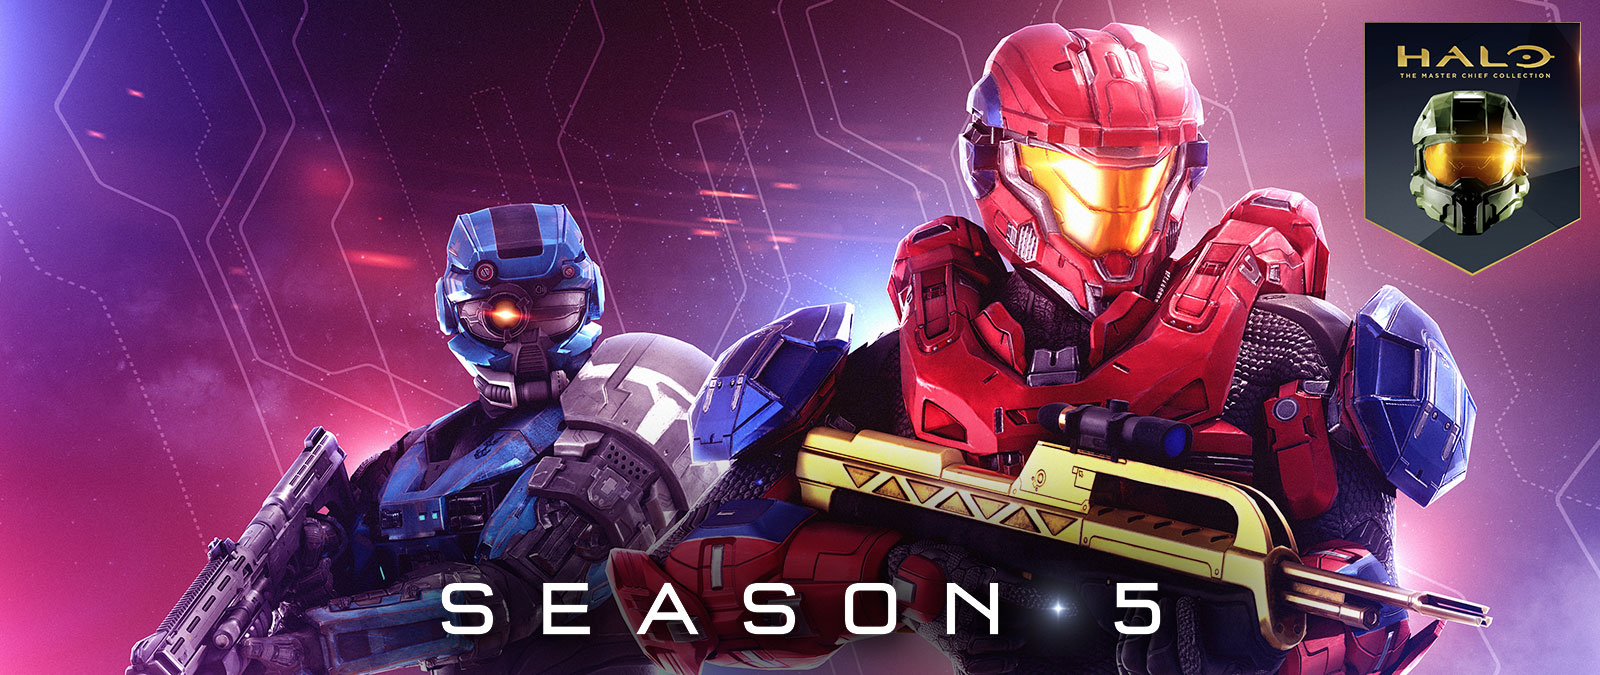 Halo: The Master Chief Collection，Season 5，紅色超級戰士拿著金色戰用步槍，而藍色超級戰士戴著特殊的單眼頭盔